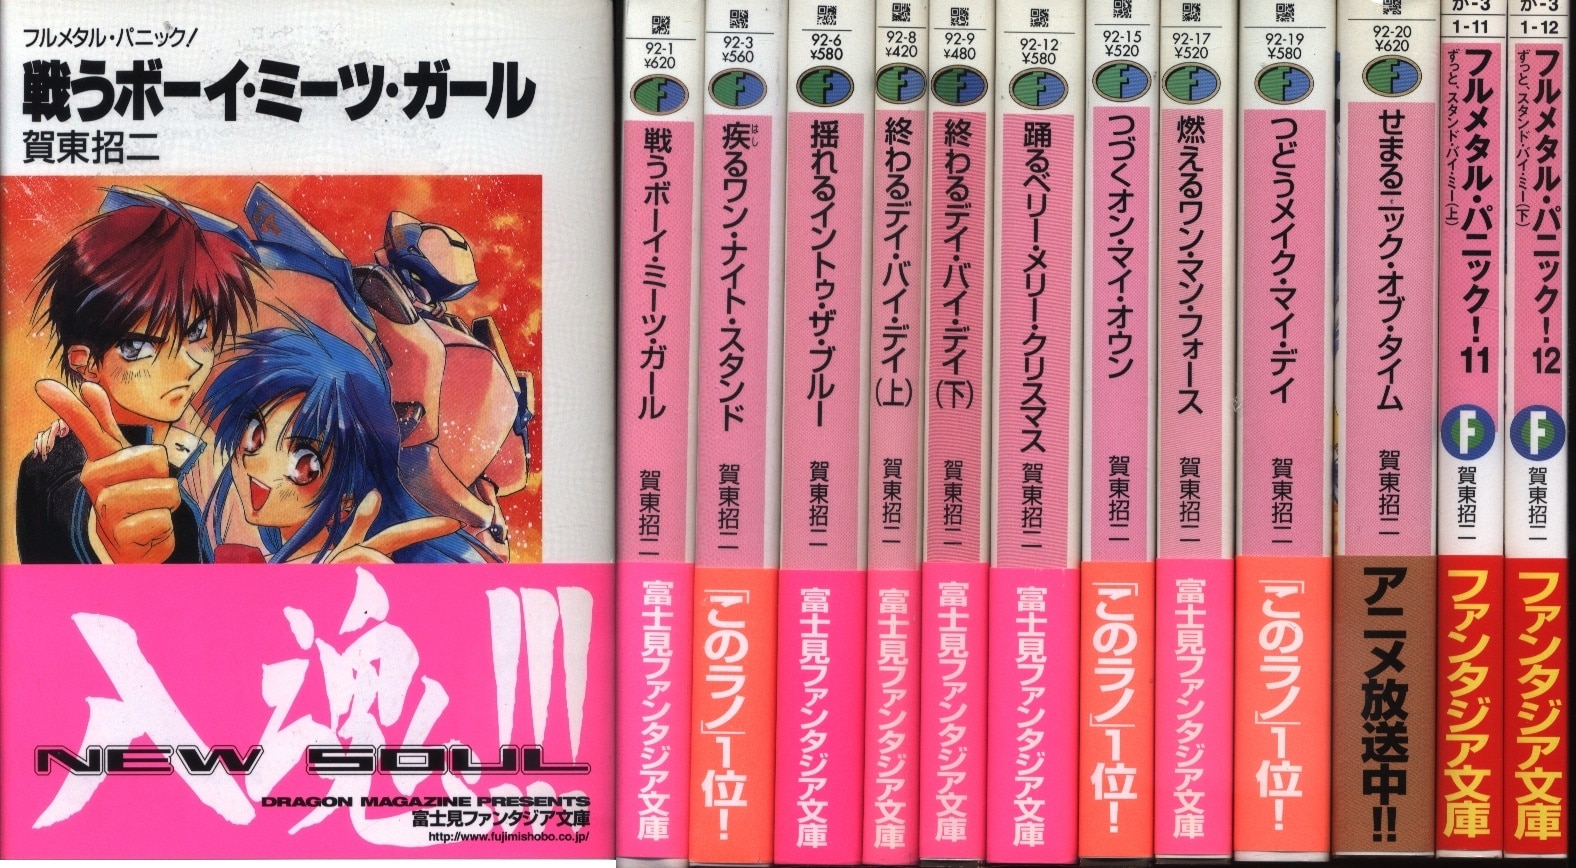 Fujimi Shobo Fujimi Fantasia Bunko Shoji Gatoh Full Metal Panic Complete 12 Volume Set With Obi Mandarake Online Shop